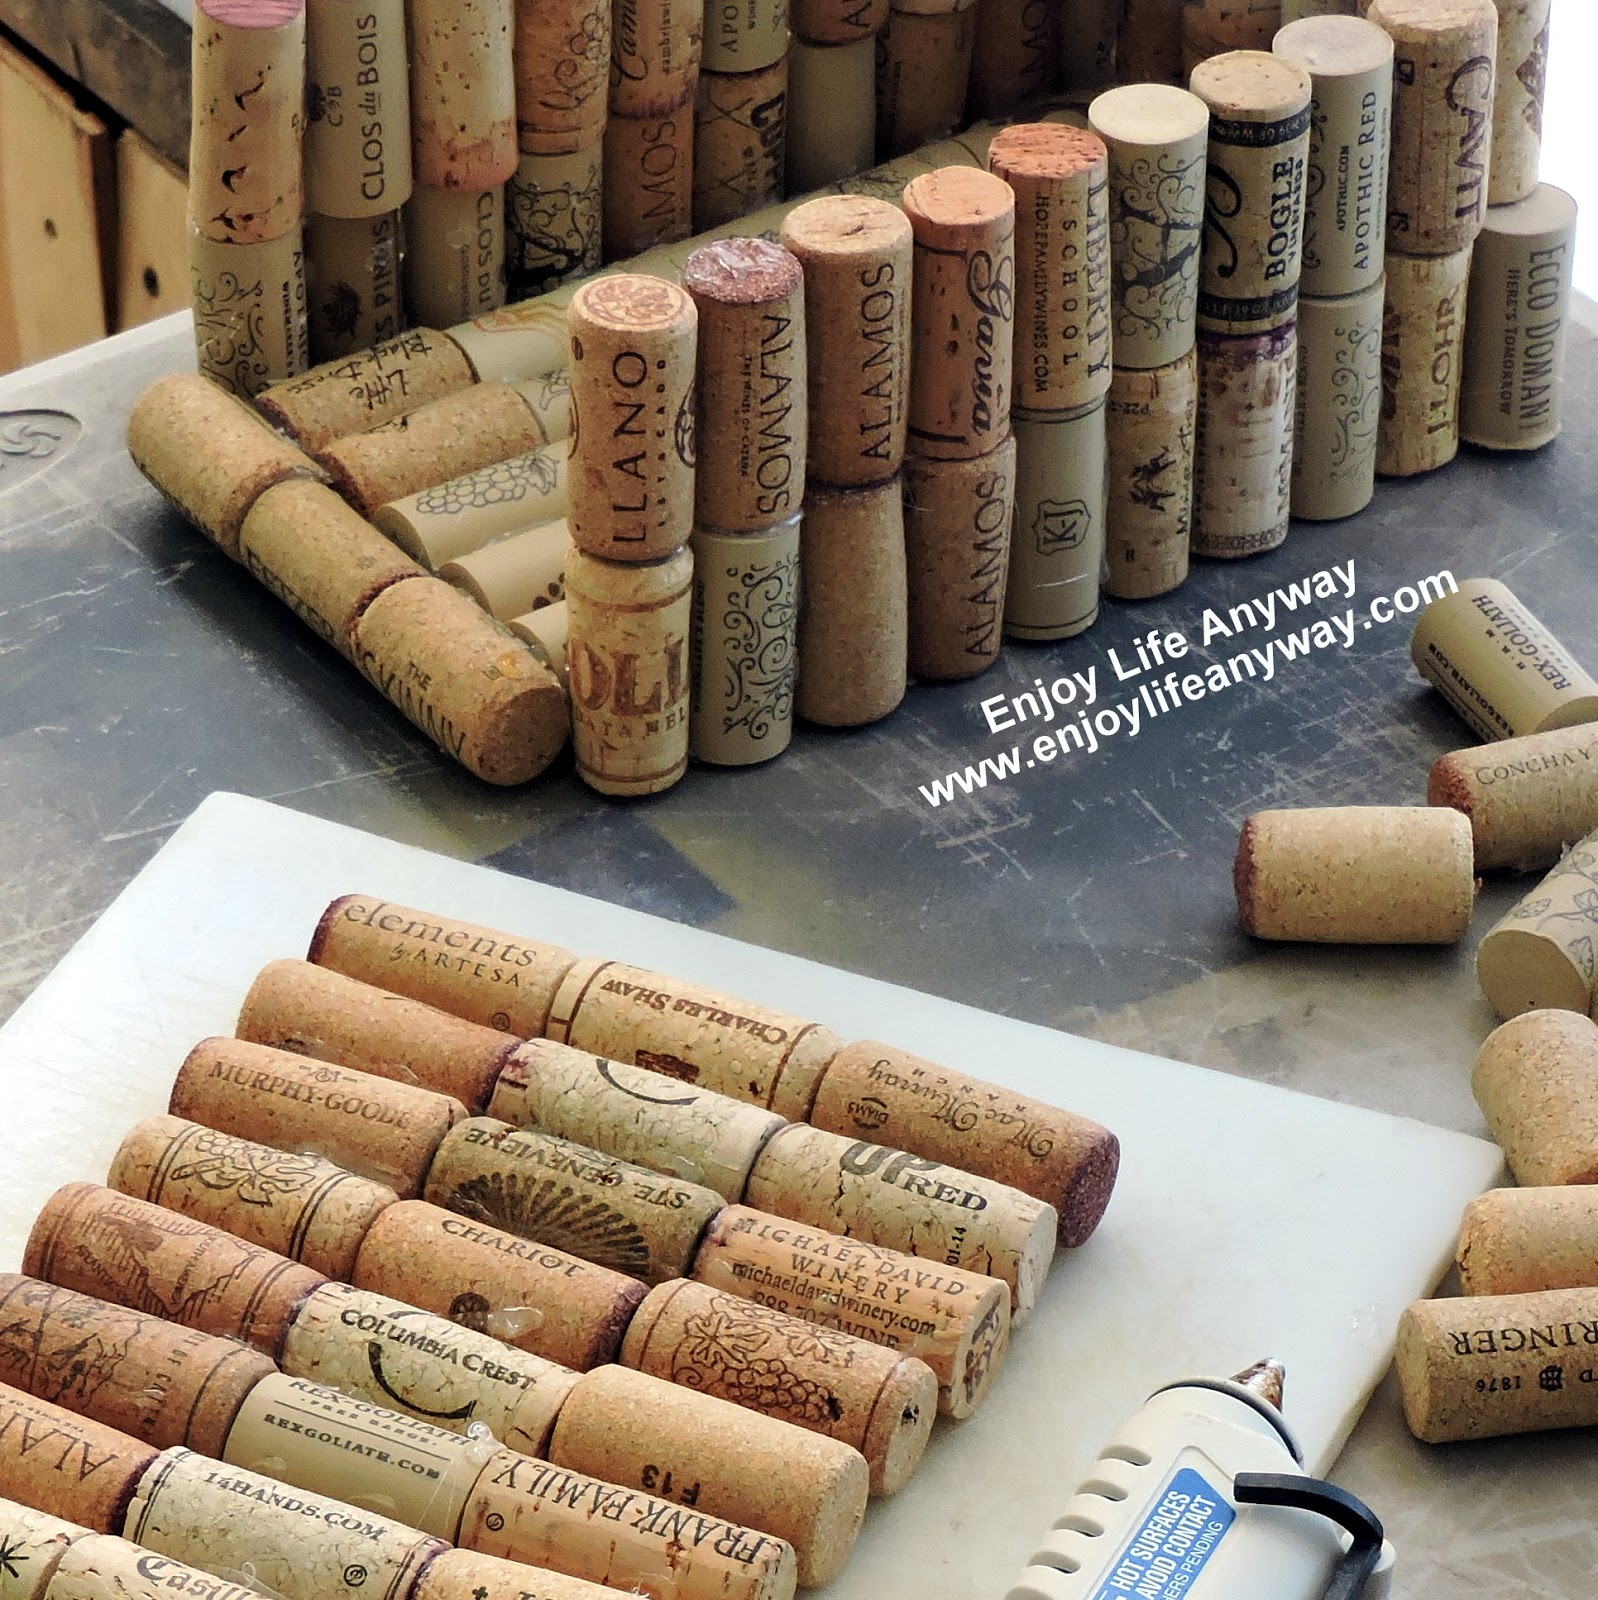 DIY Wine Cork Craft Ideas - Nectar of the Vine